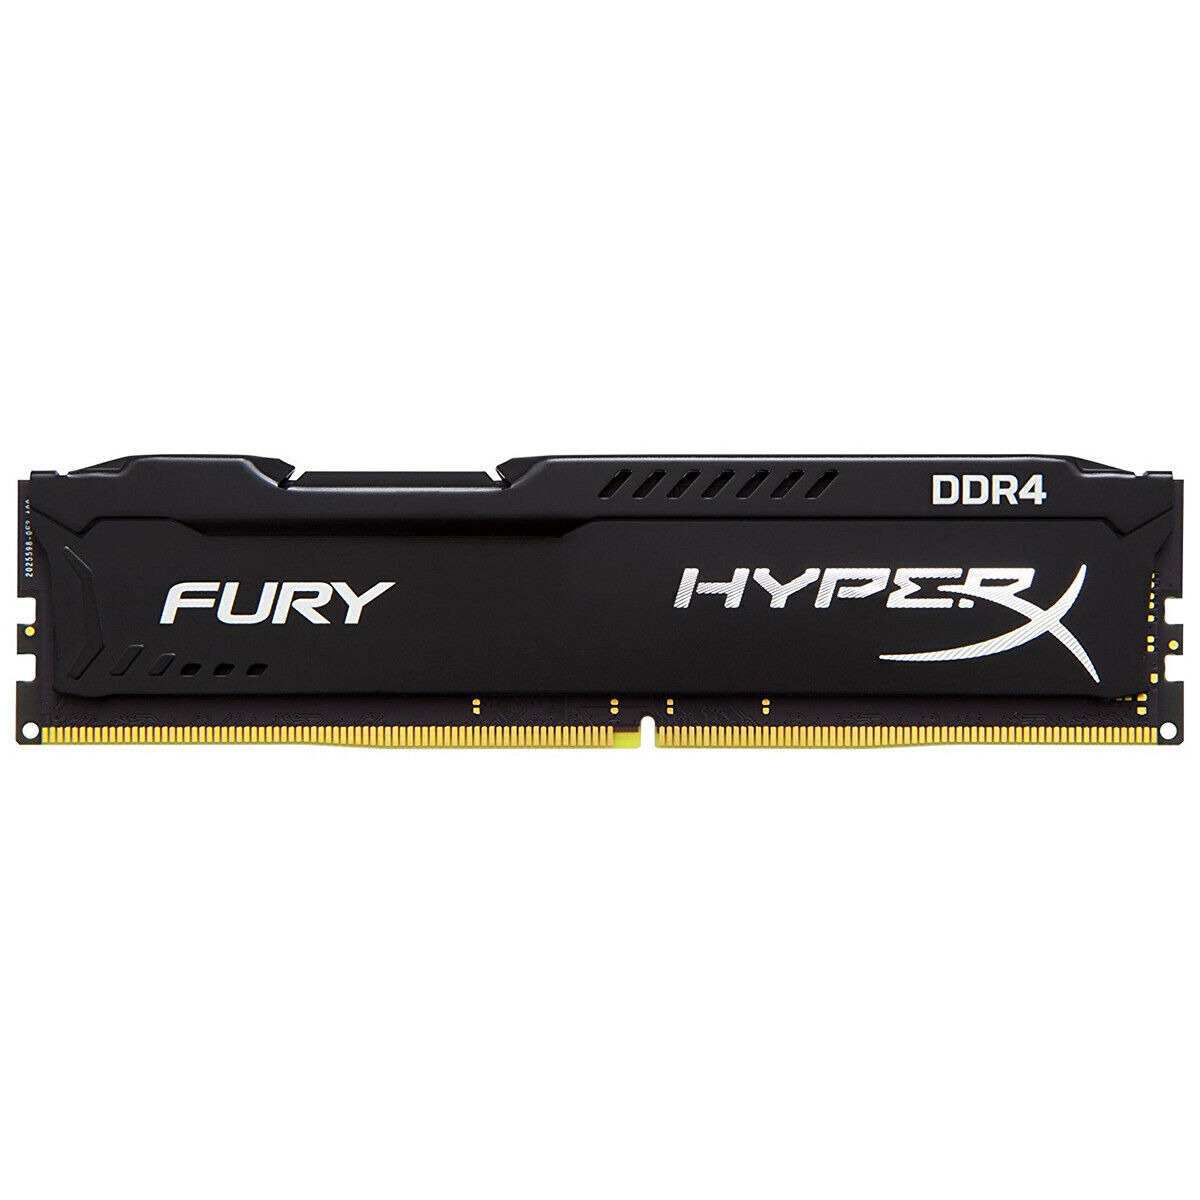 HyperX FURY DDR4 16GB 32GB 64GB 2666MHz 3200MHZ Desktop RAM Memory DIMM 288pins